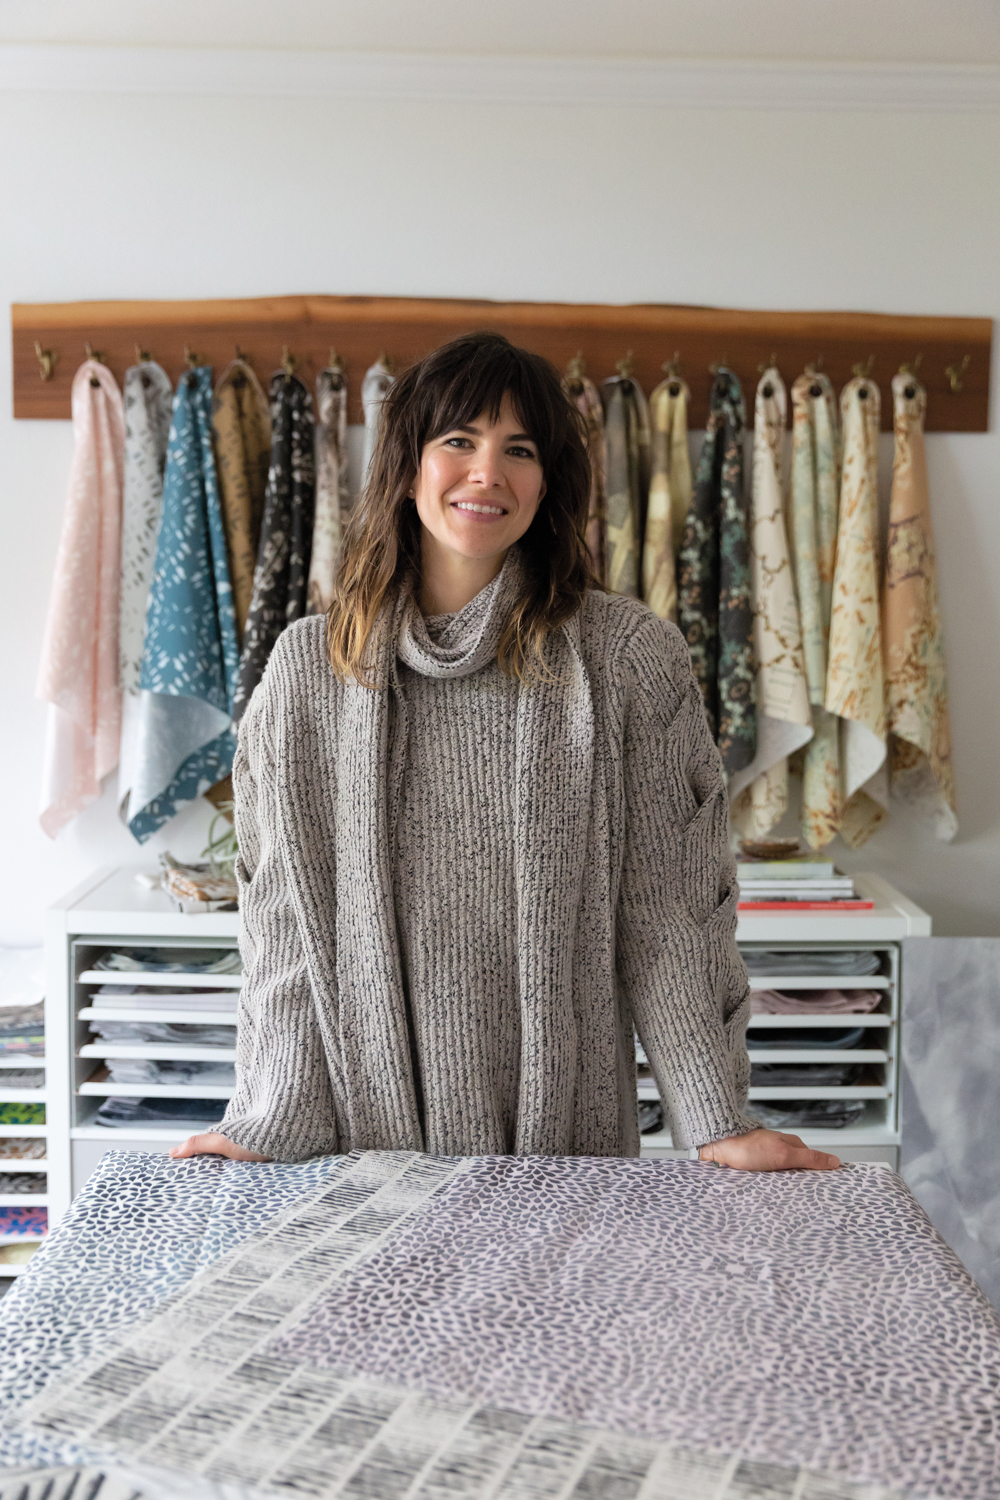 Portrait of artist and designer Kate Miller in her textile studio.